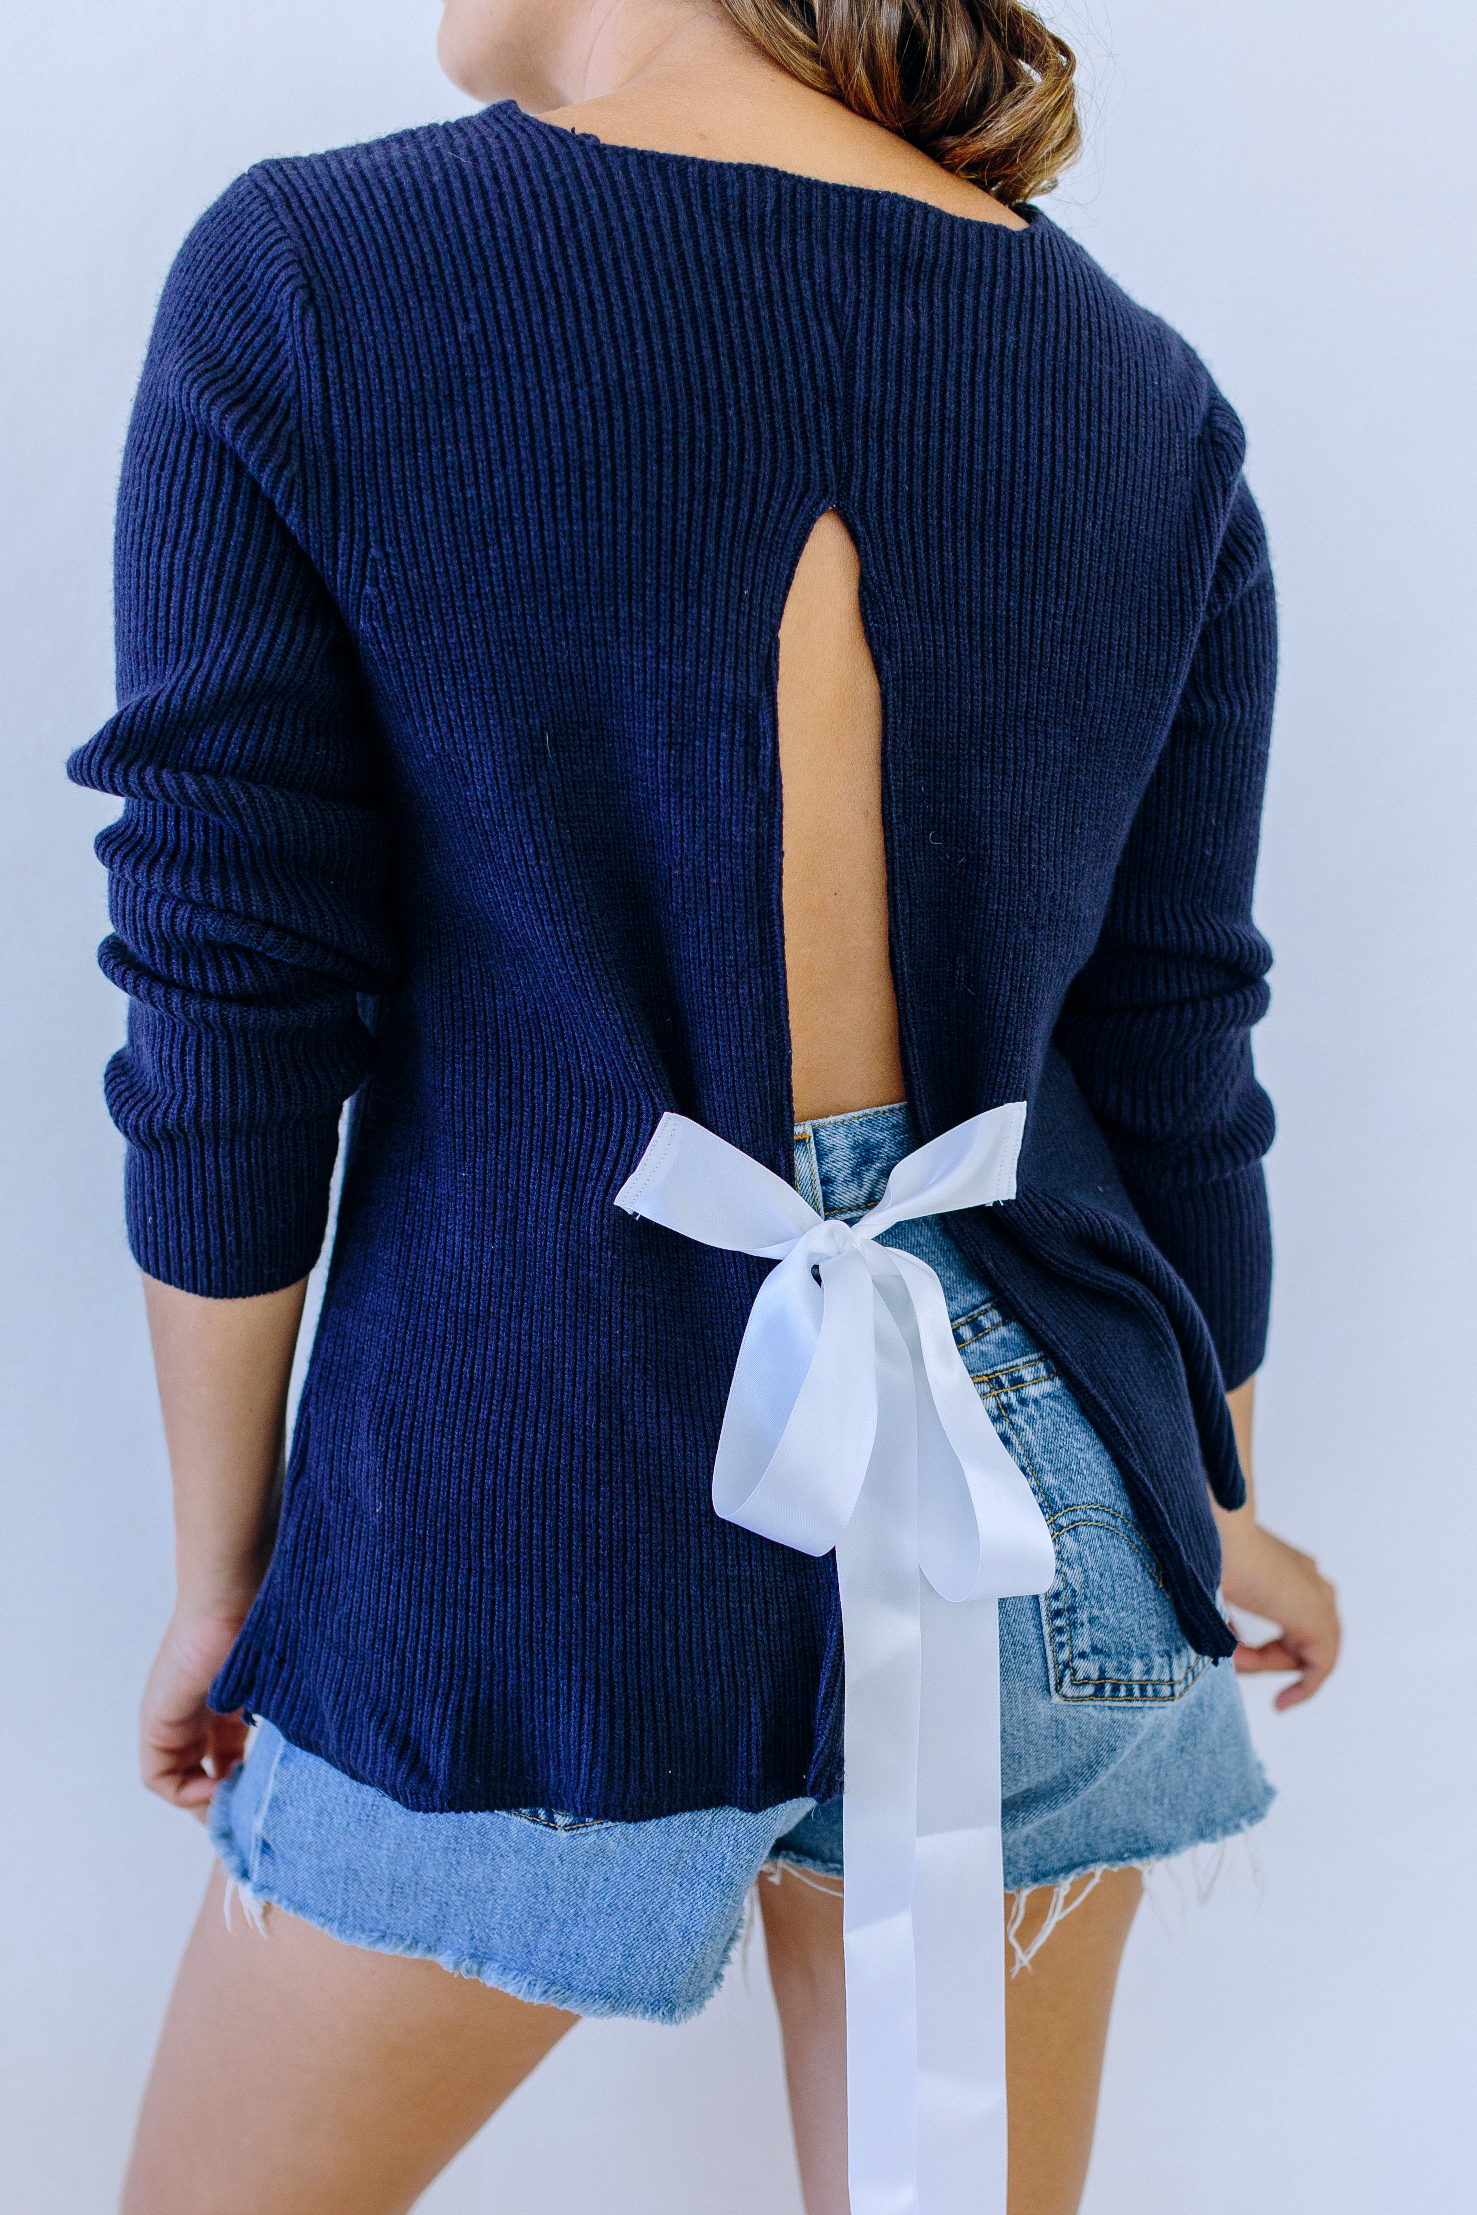 DIY Bow Back Sweater